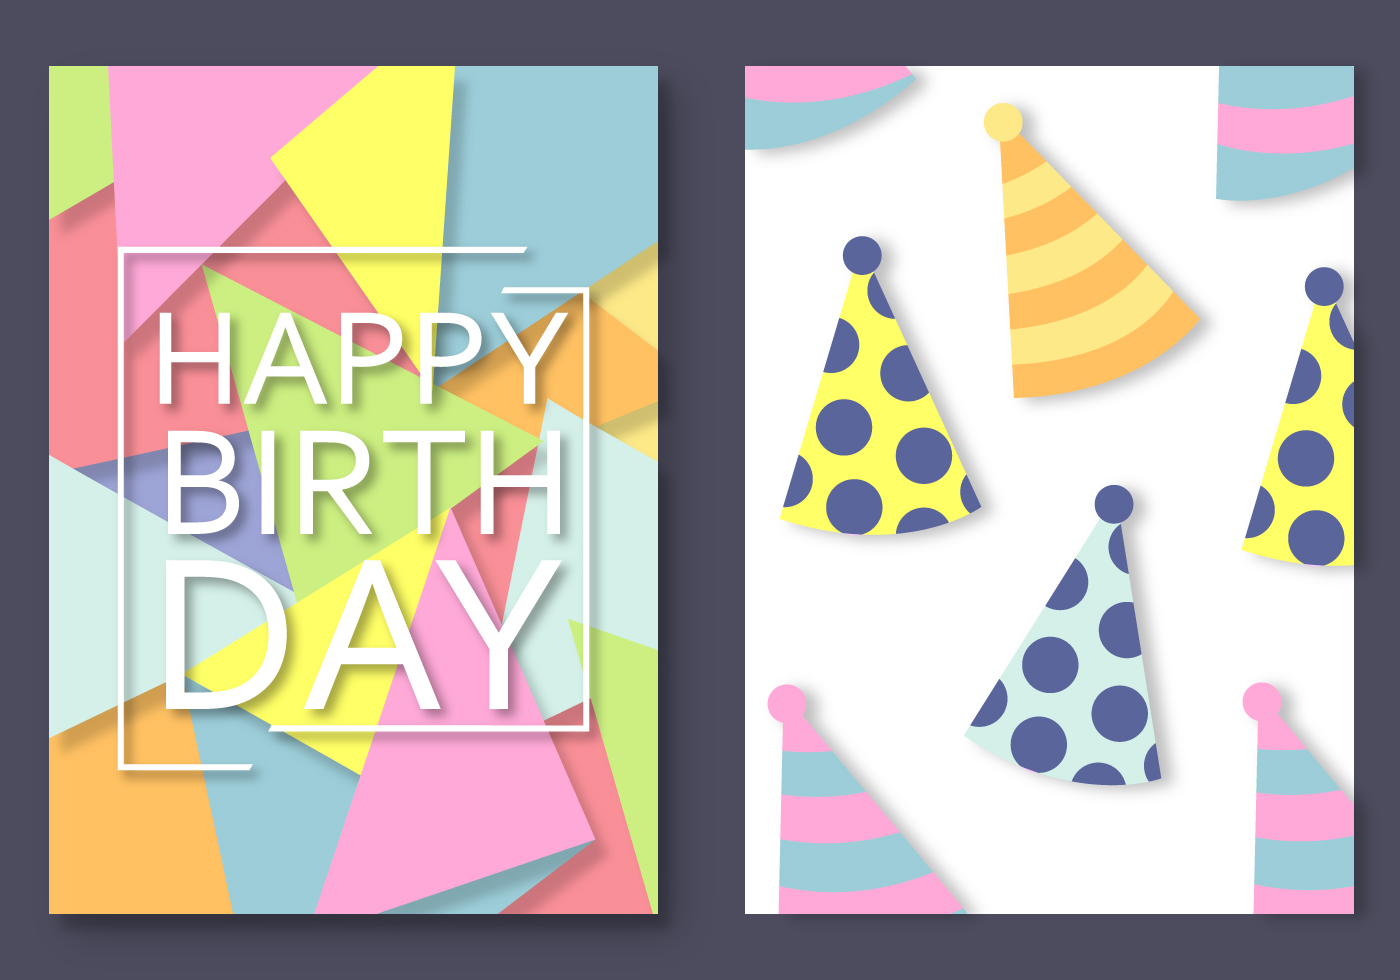 Download Free Happy Birthday Card Vector - Download Free Vectors ...